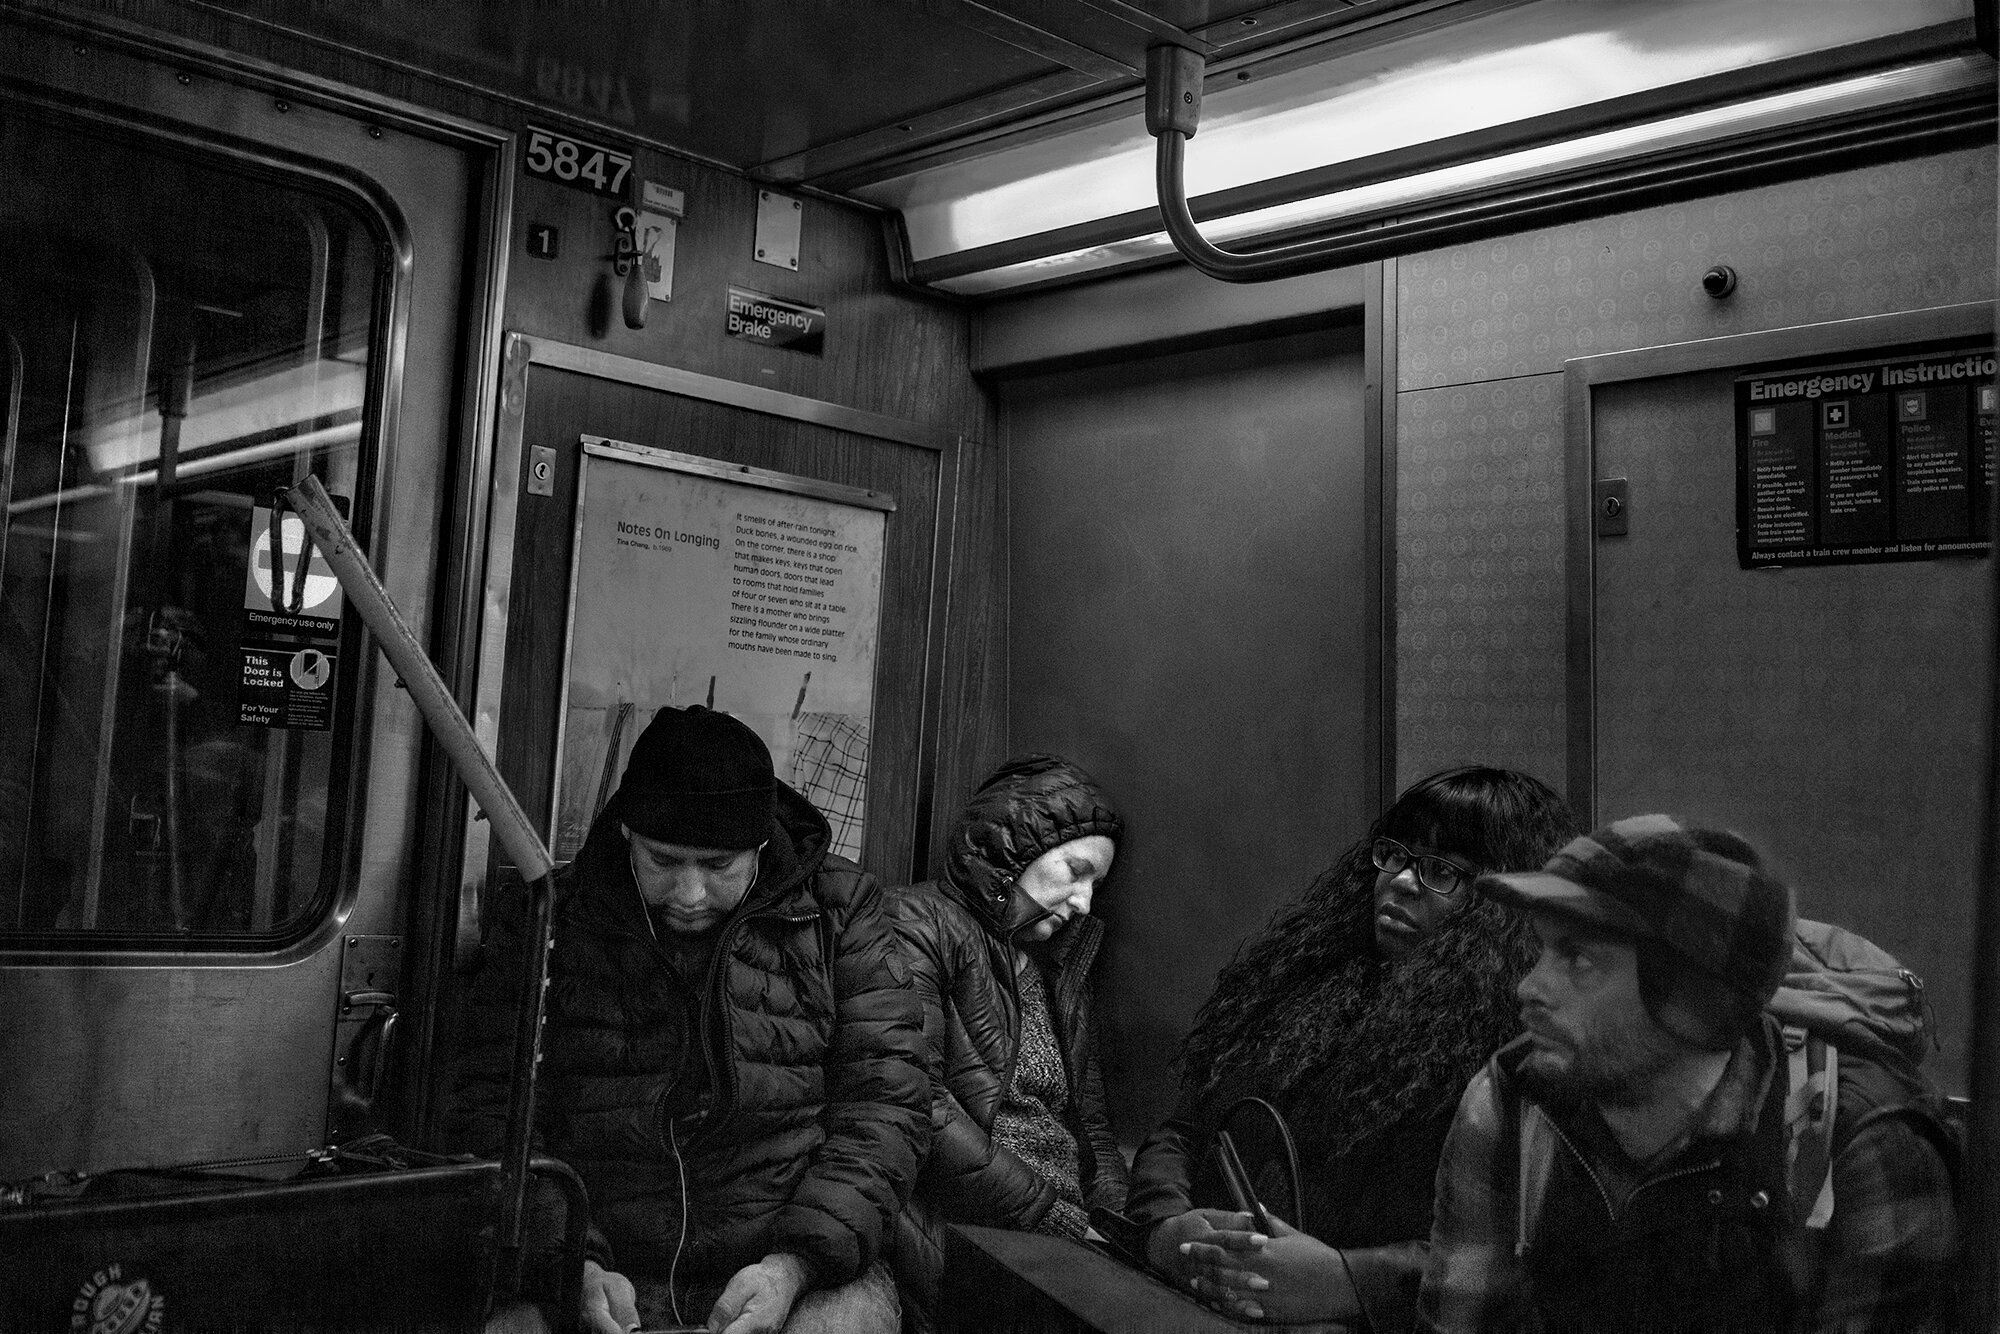 Brklyn_Subway_2019_Old_Woman_Sleeping_Alone-003.jpg